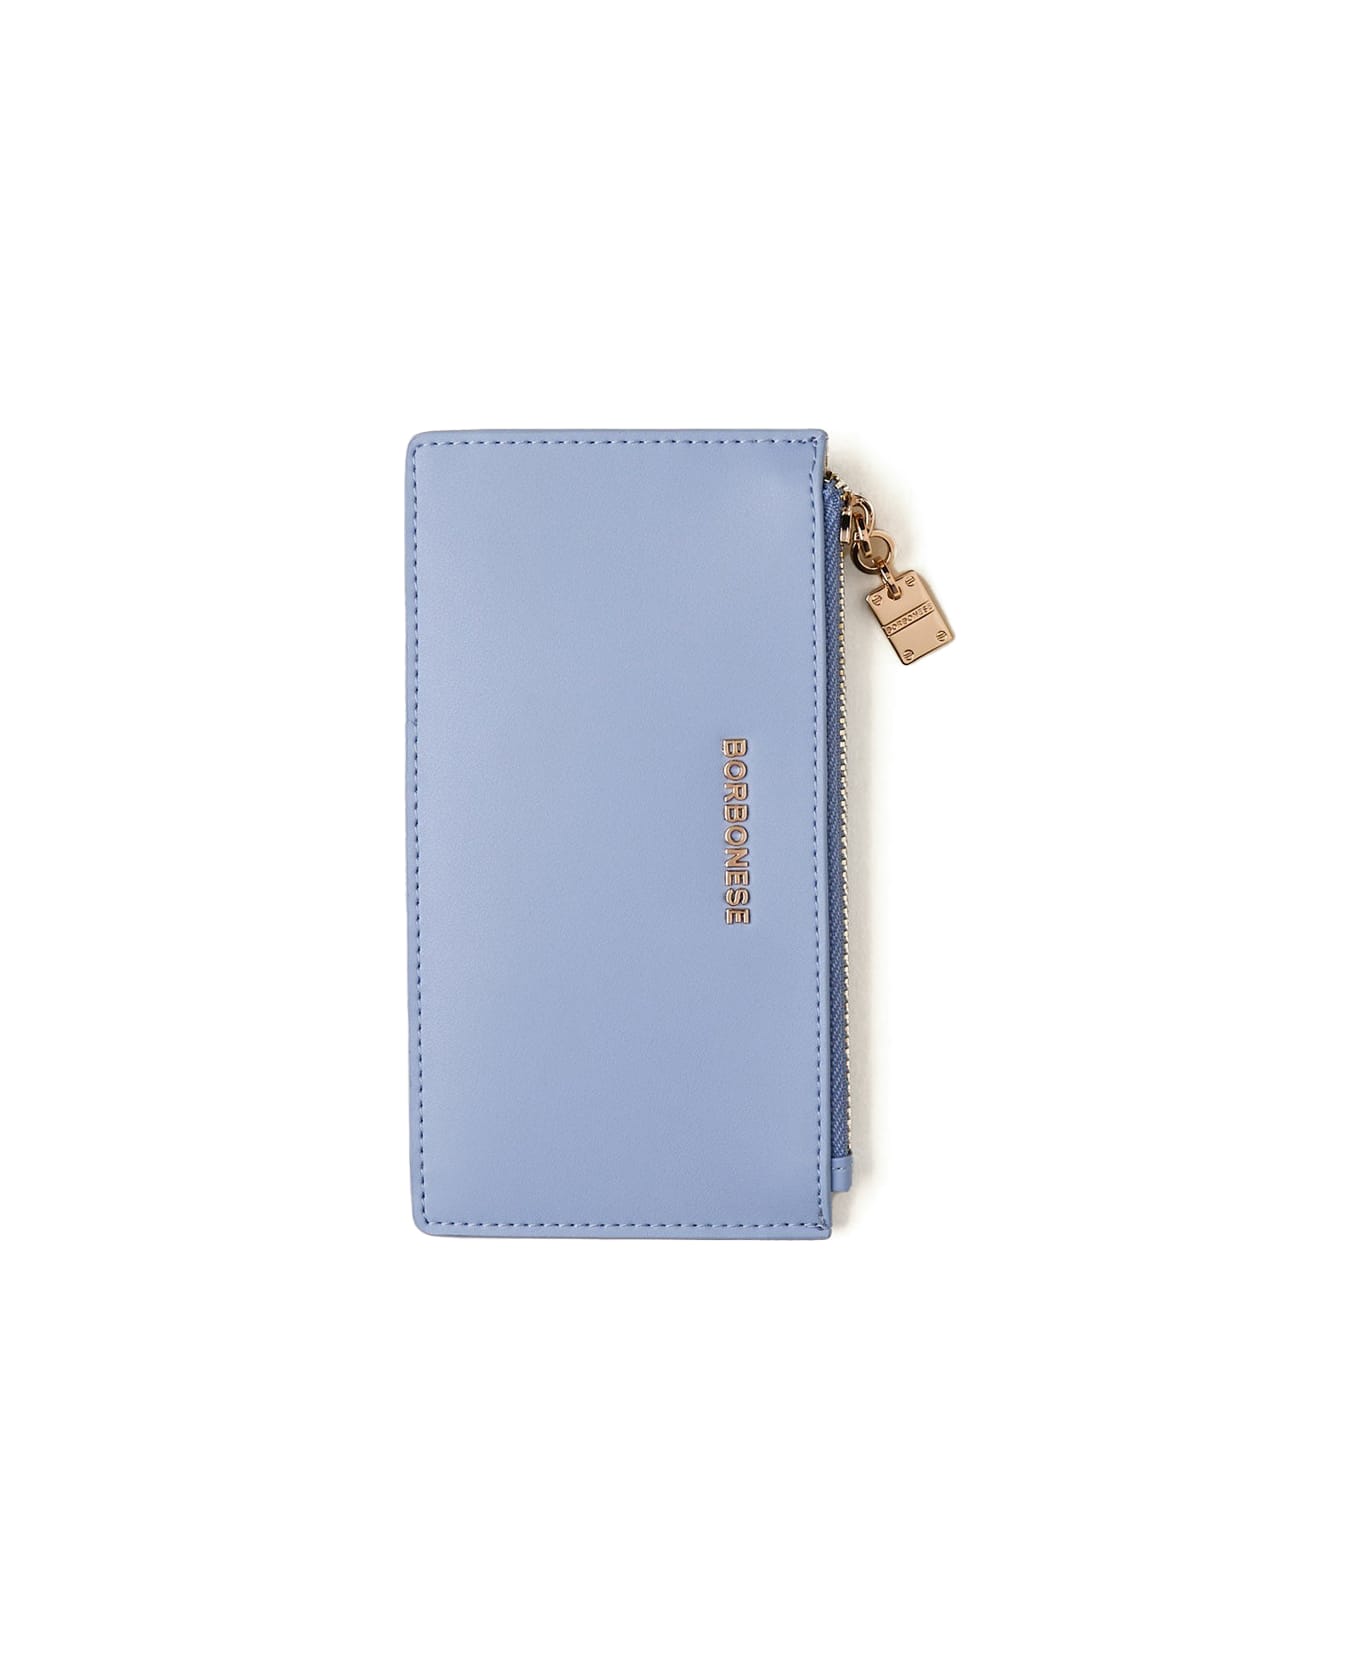 Borbonese Medium Light Blue Leather Card Holder - TOPAZIO